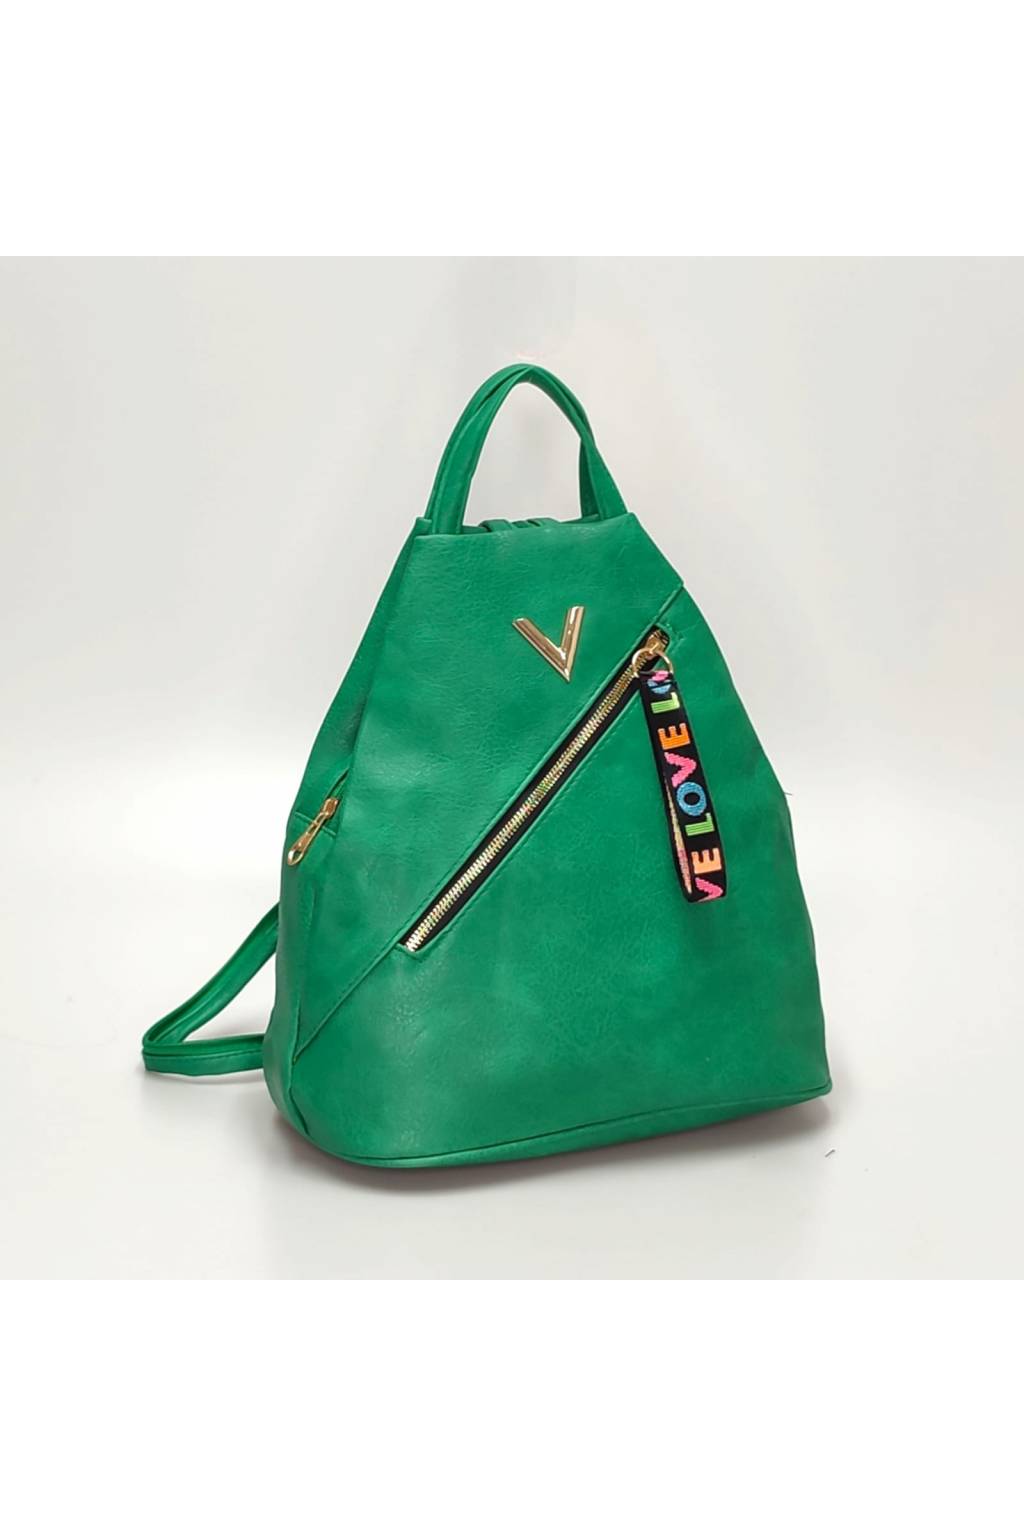 Dámsky ruksak 6880 zelený www.kabelky vypredaj (15)